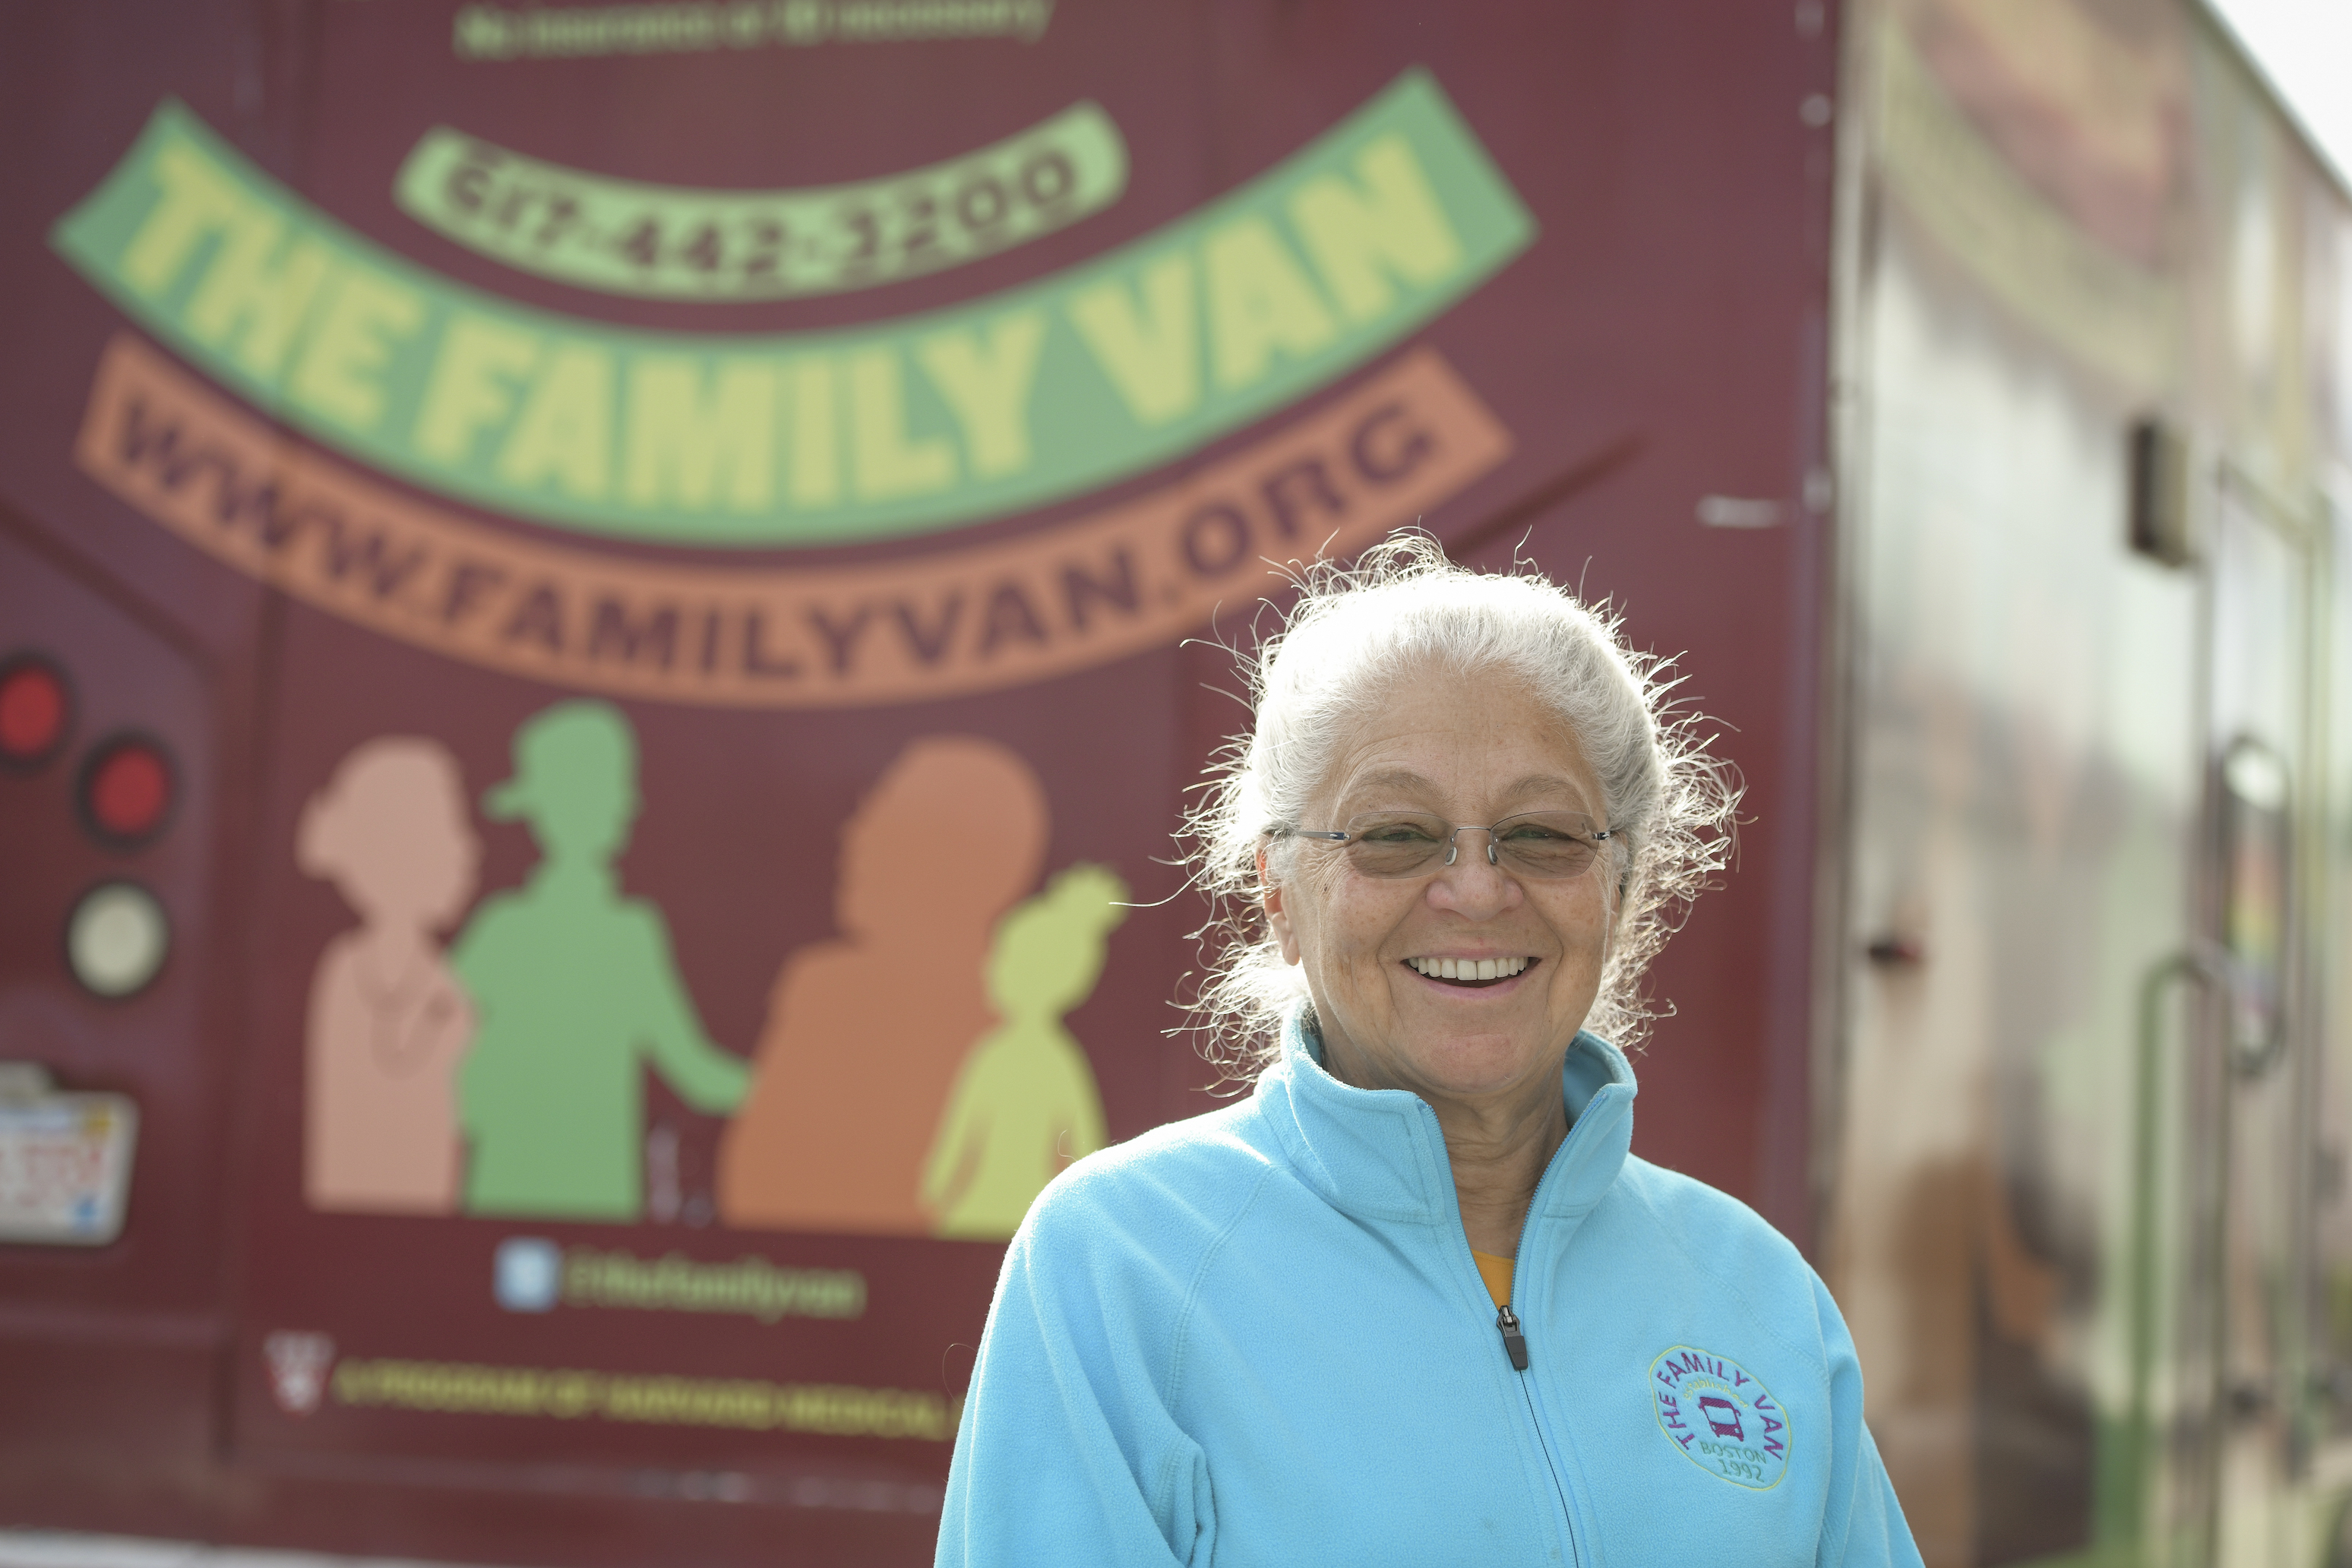 Dr. Nancy Oriol and the Family Van